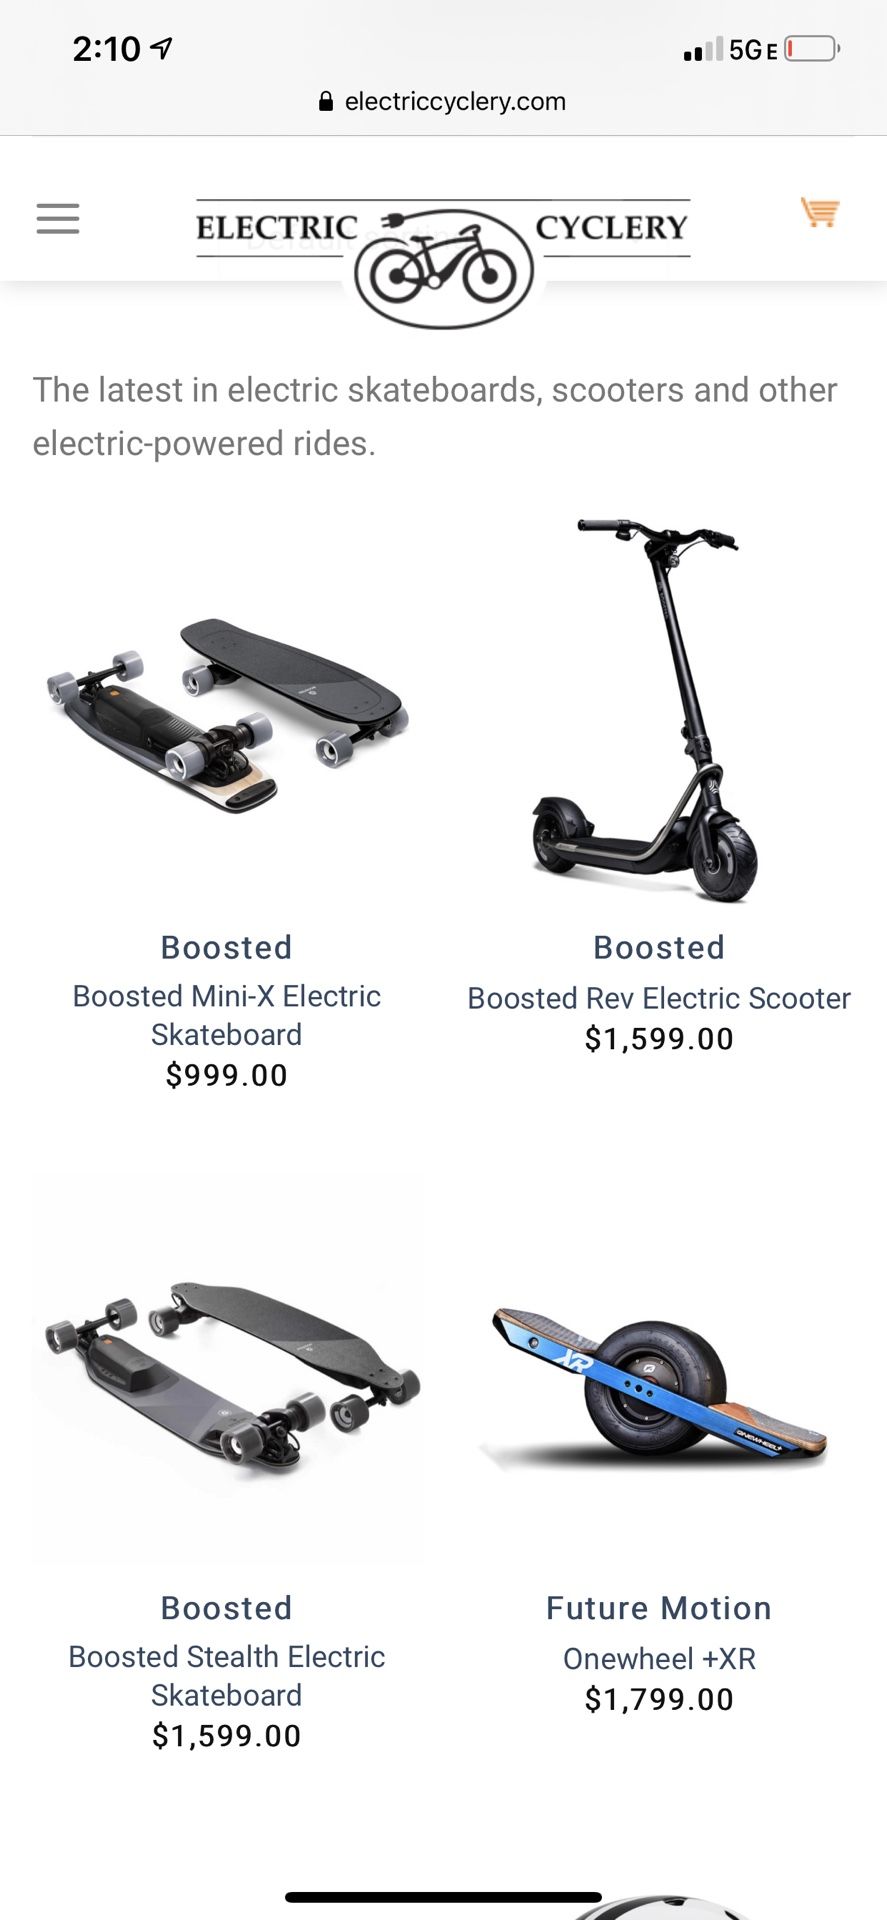 Boosted series electrical skateboard, skate board, one wheel skate boards